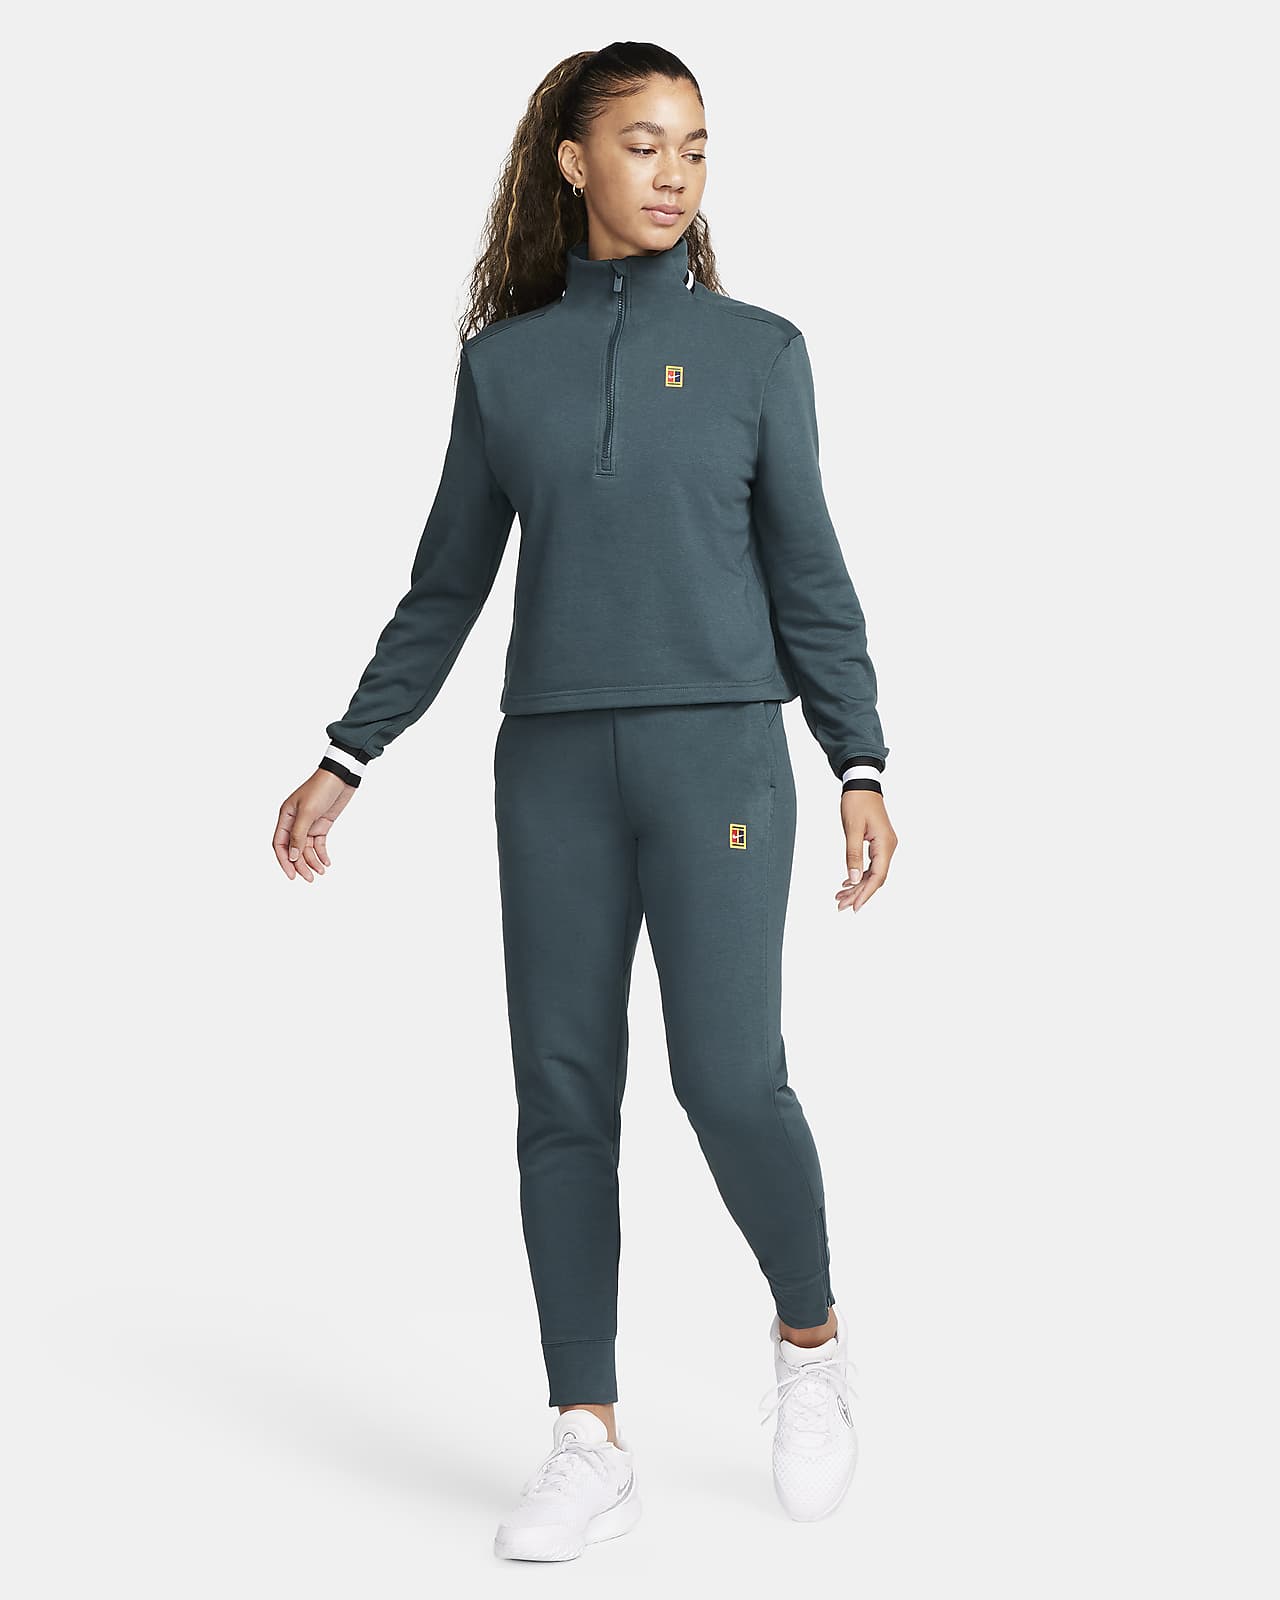 Buy Nike Dri-Fit Performance Heritage Tight Women Black, Grey